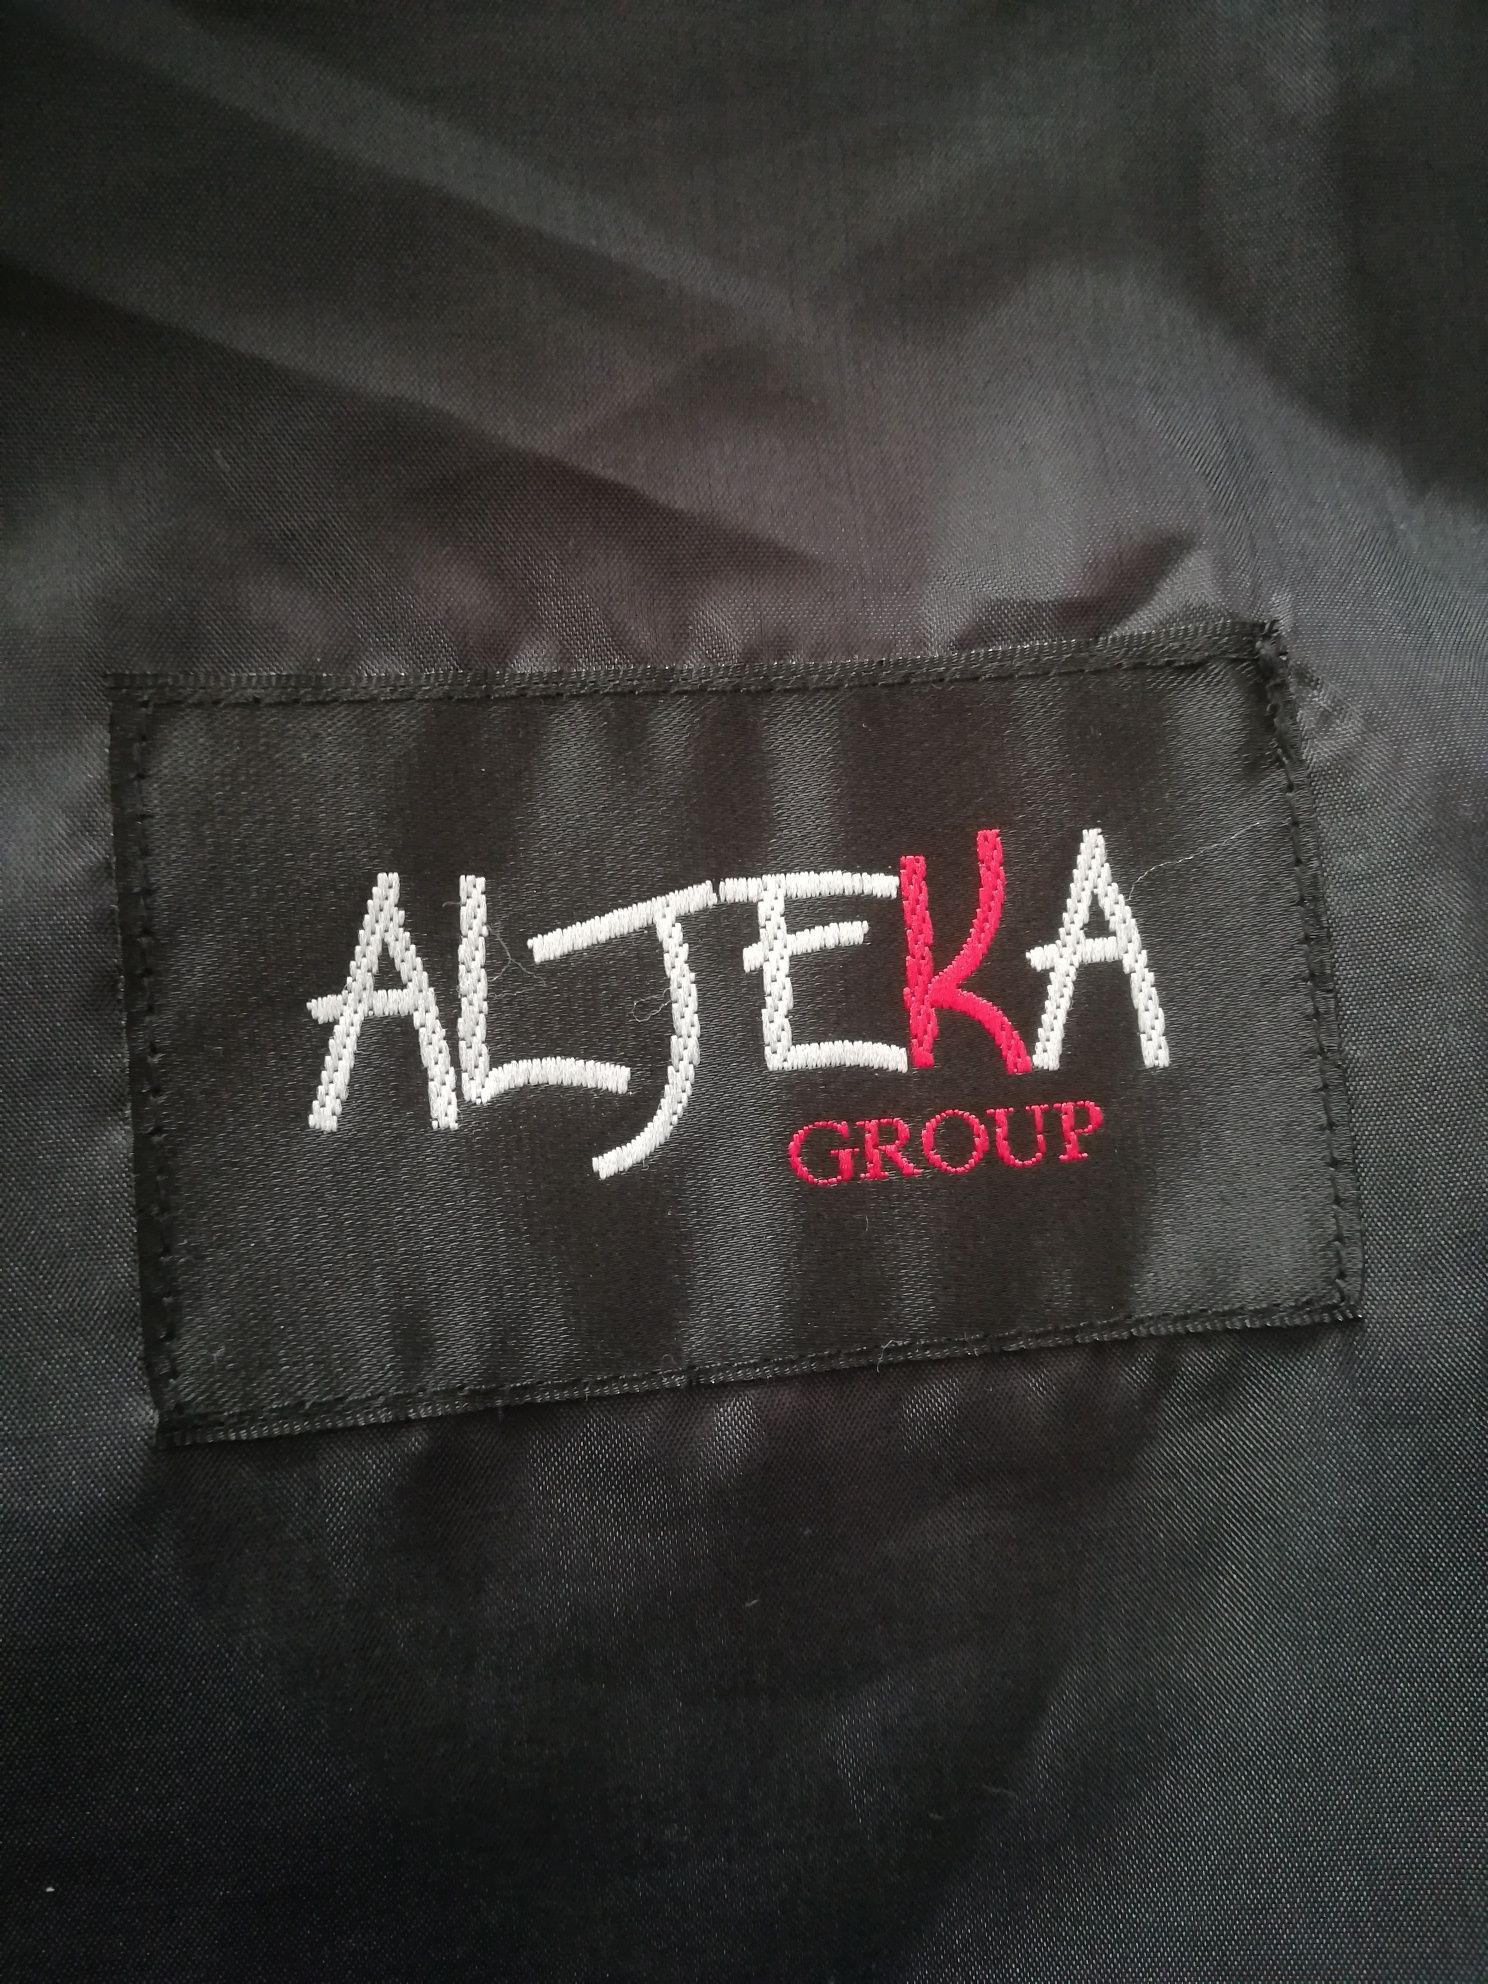 Garnitur Aljeka Group